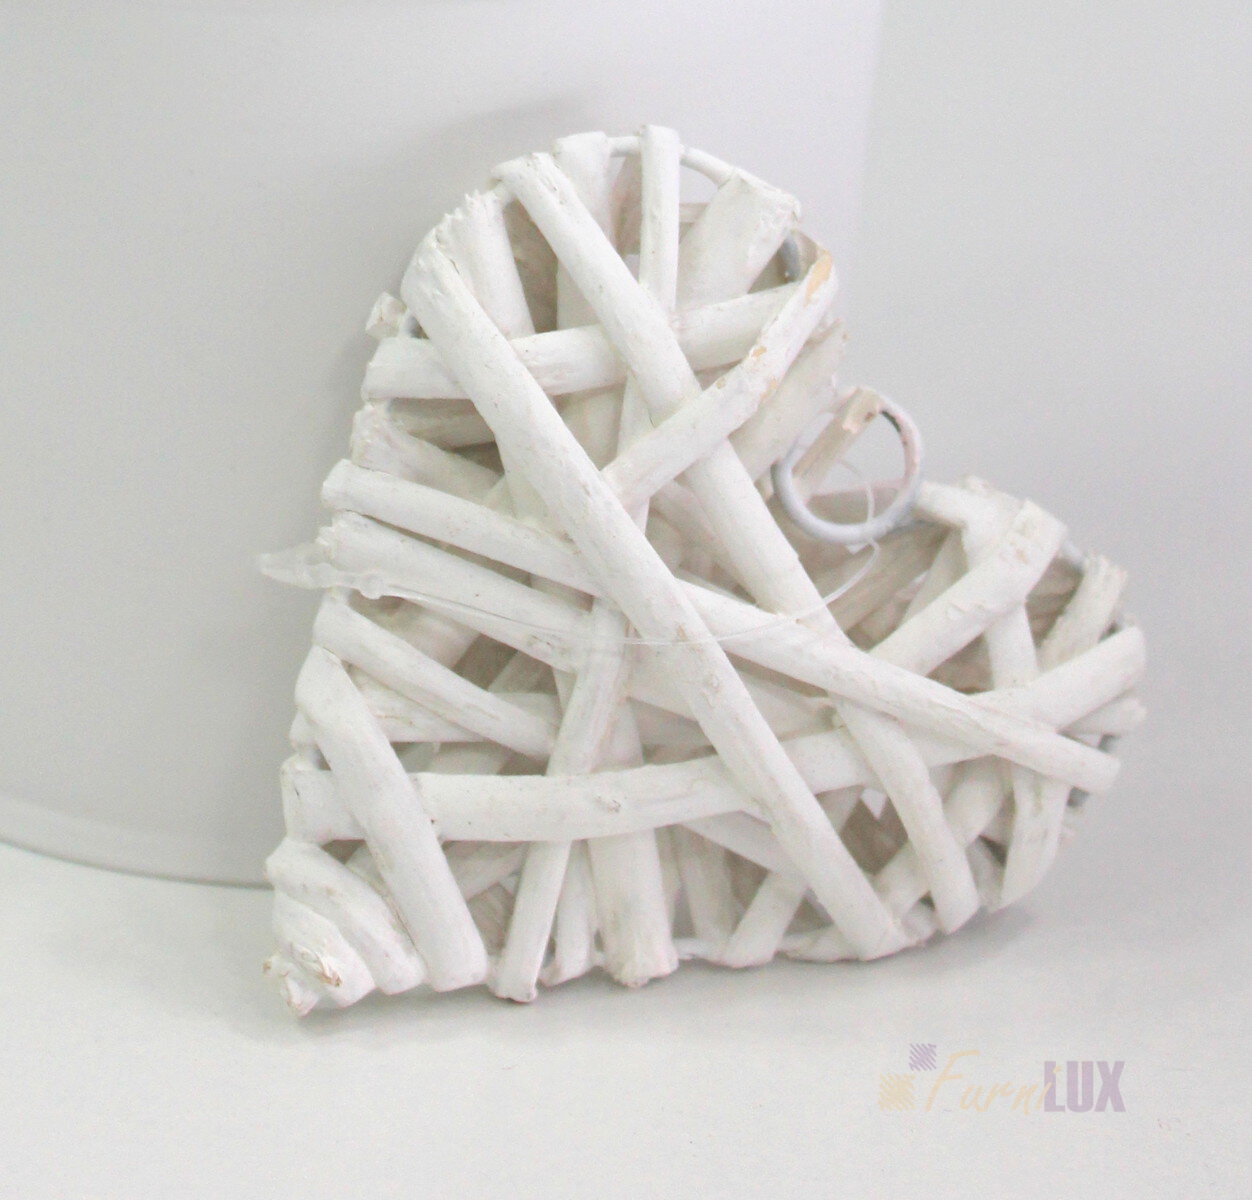 Wiklinowe serce dekoracyjne białe DM02E 10 cm